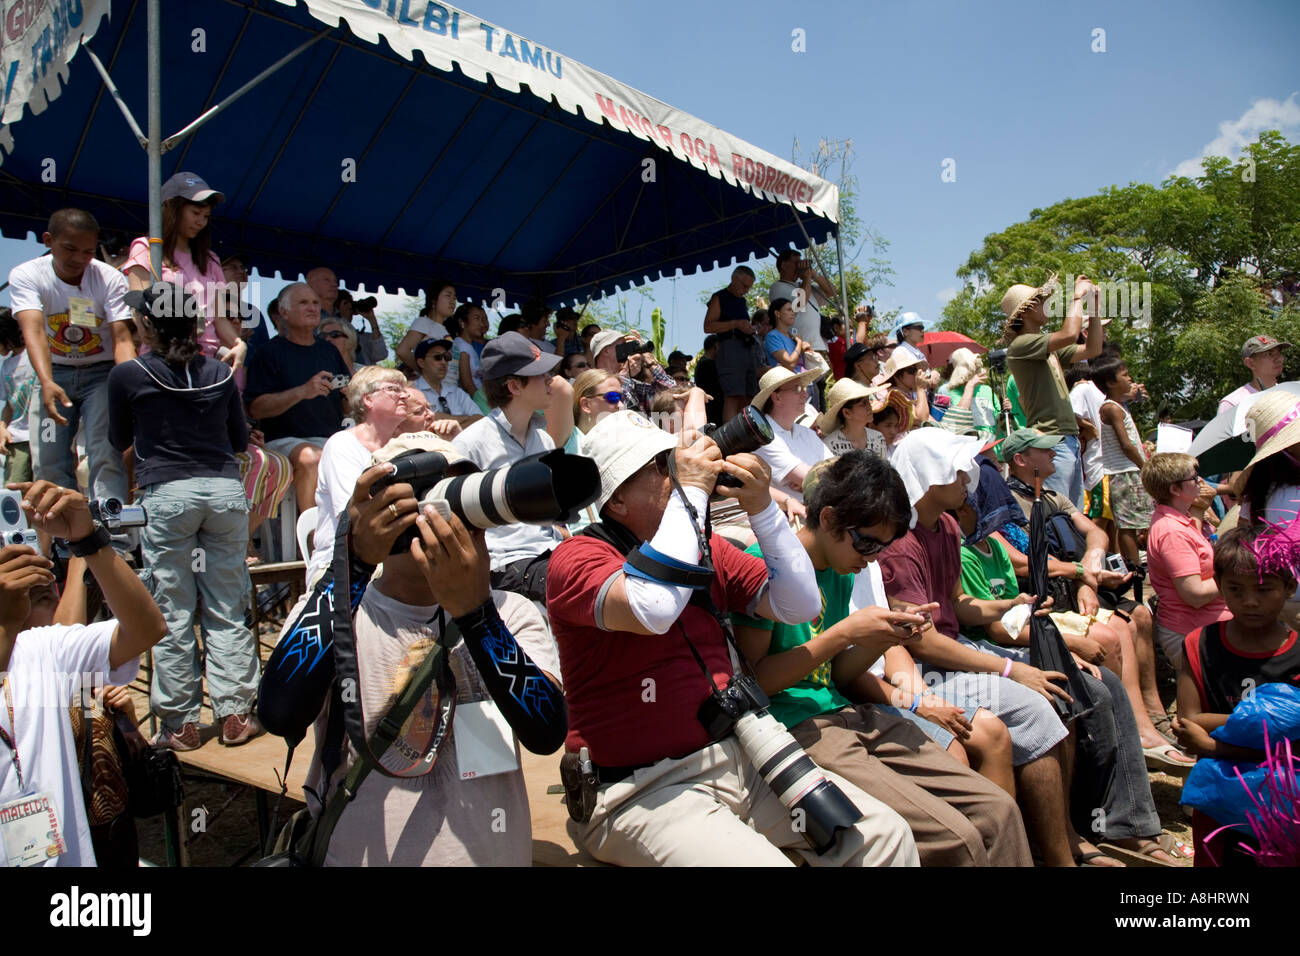 Spectators during Crucifixion of flagellants, Good Friday Lenten Rites, San Pedro Cutud, San Fernando, Philippines Stock Photo